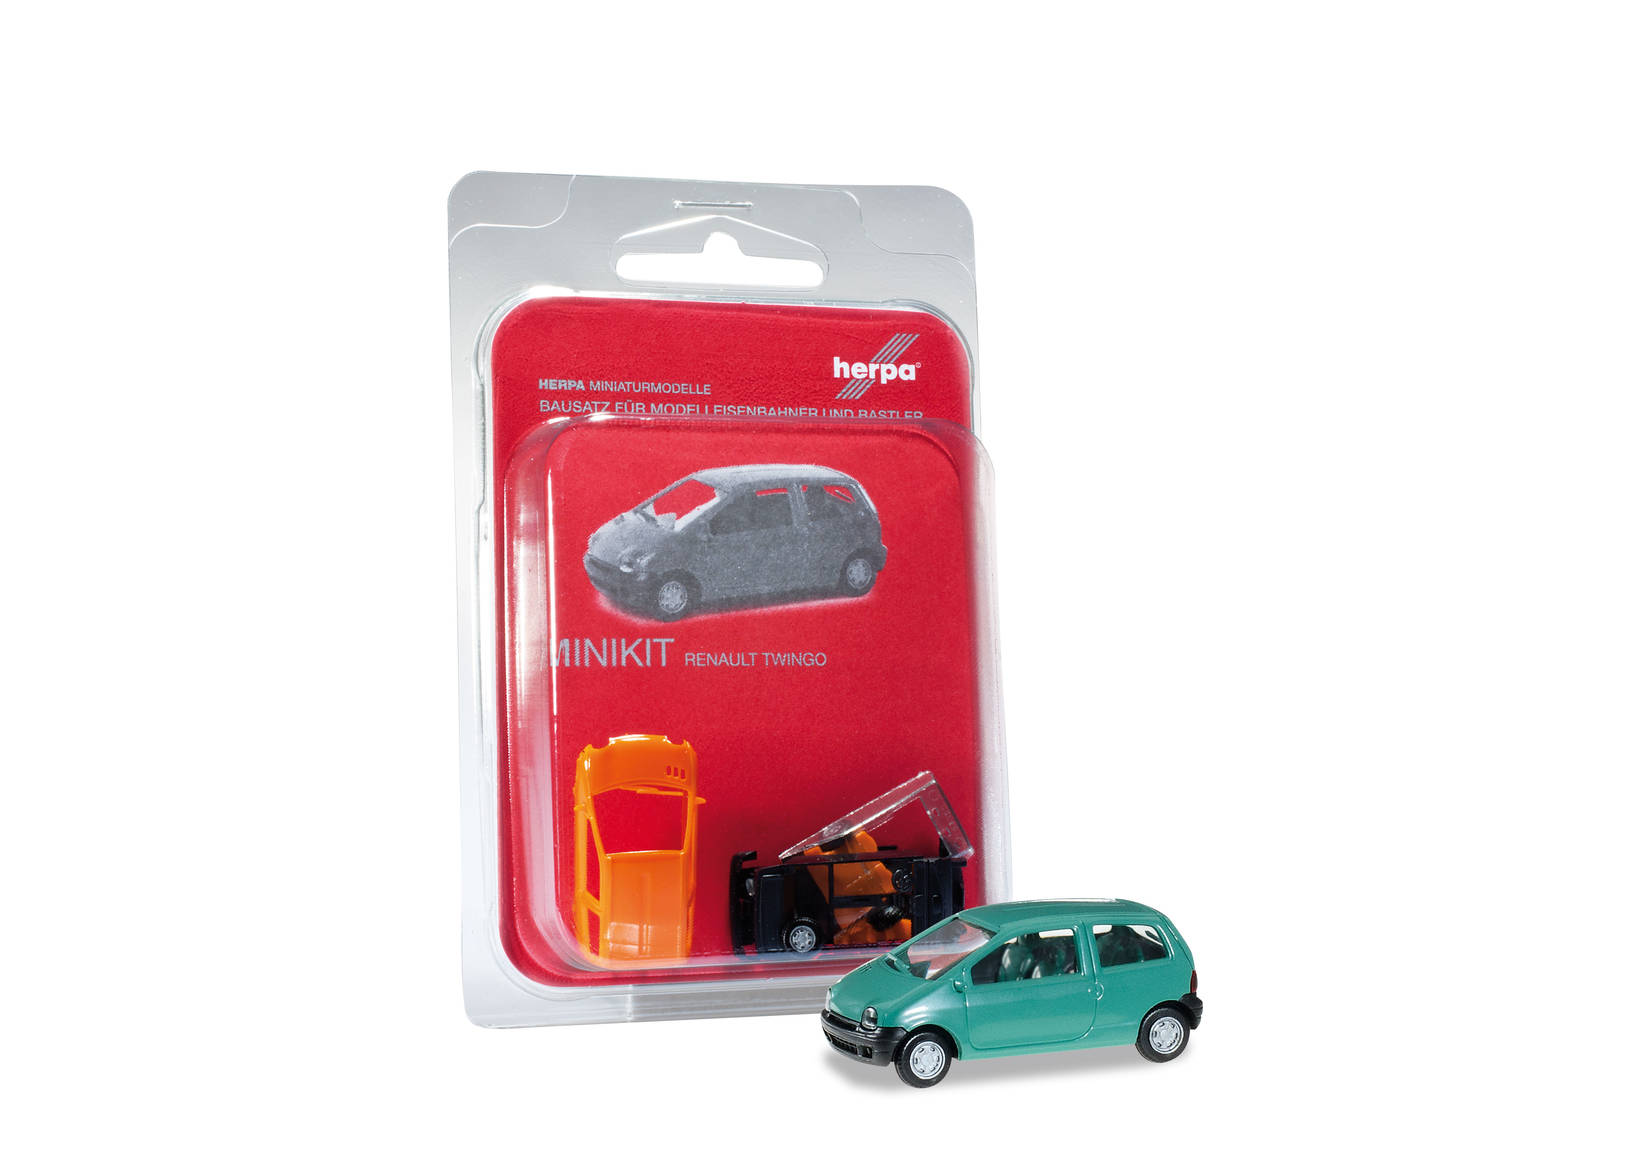 Herpa MiniKit: Renault Twingo, green